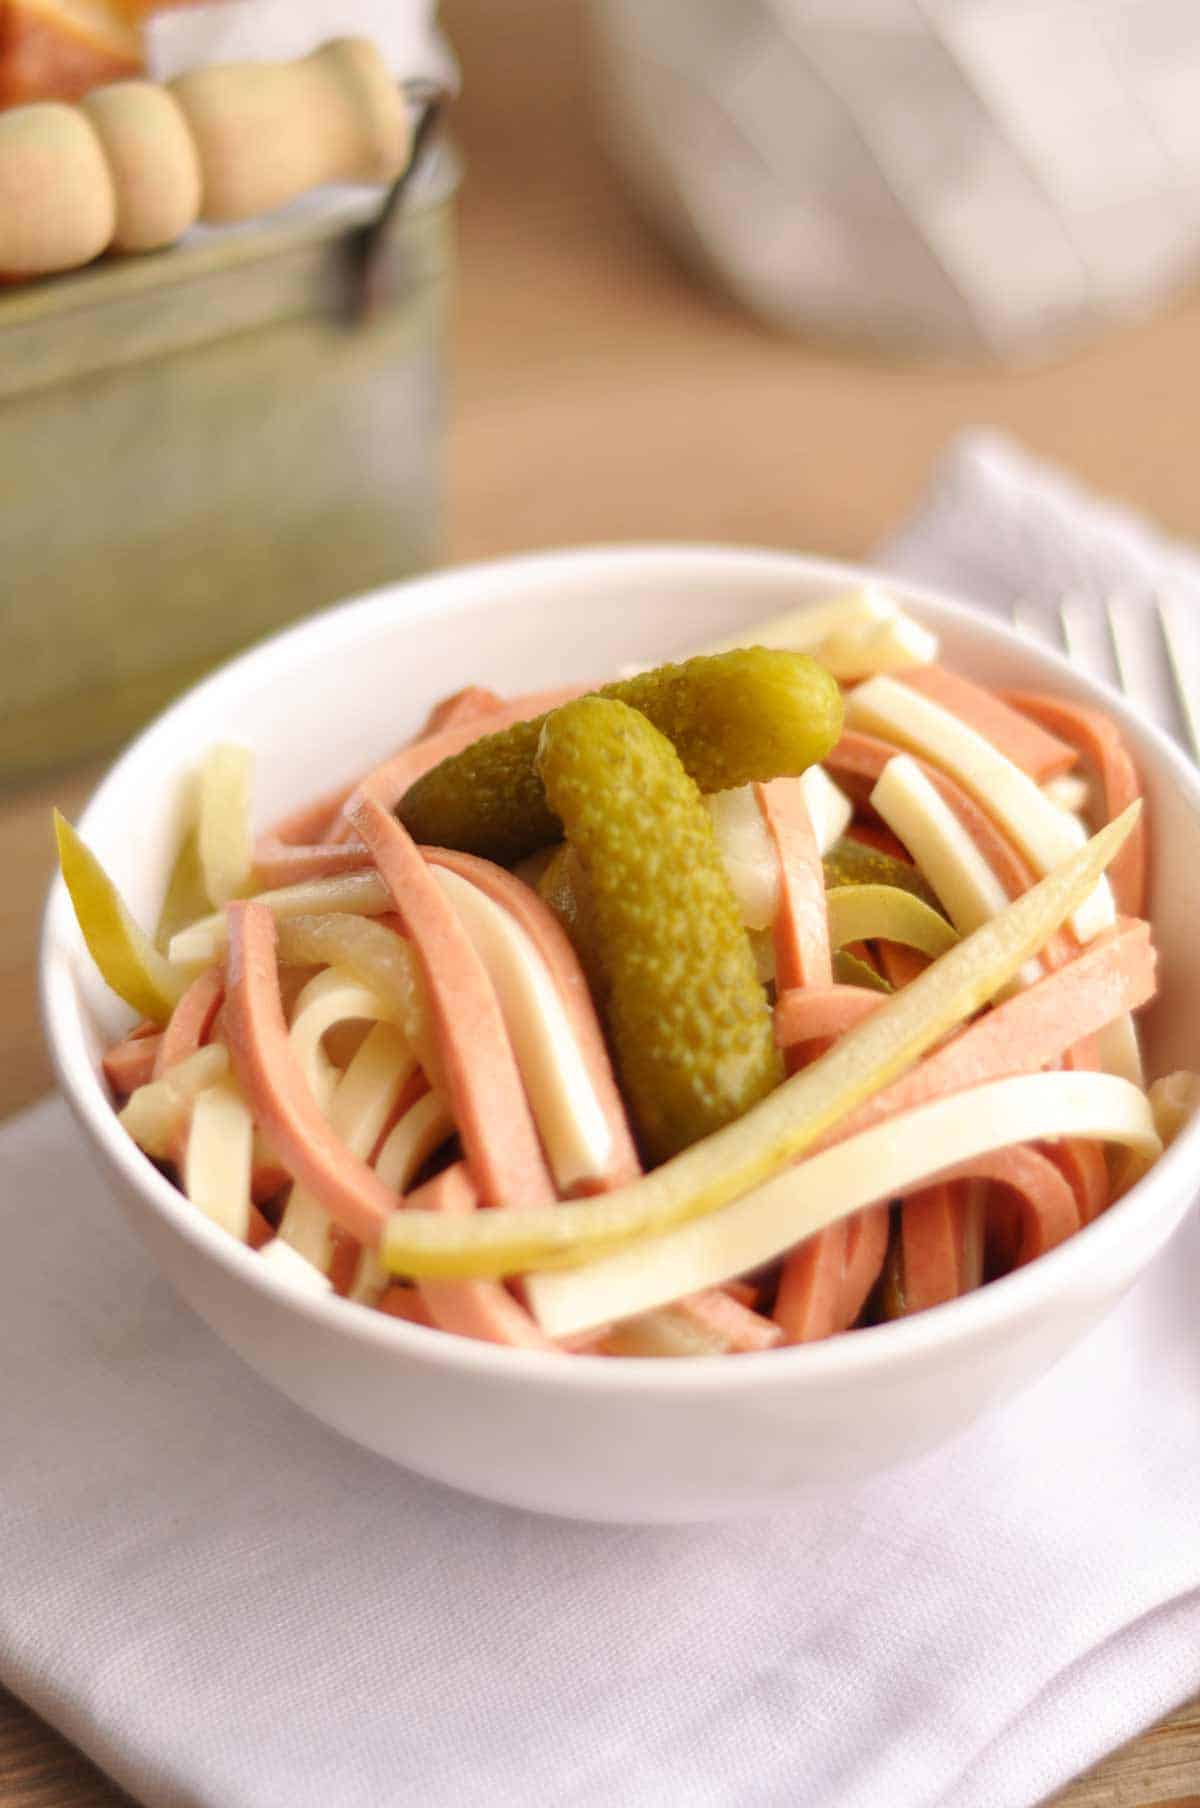 German Wurst Salad - Lunch or appetizer